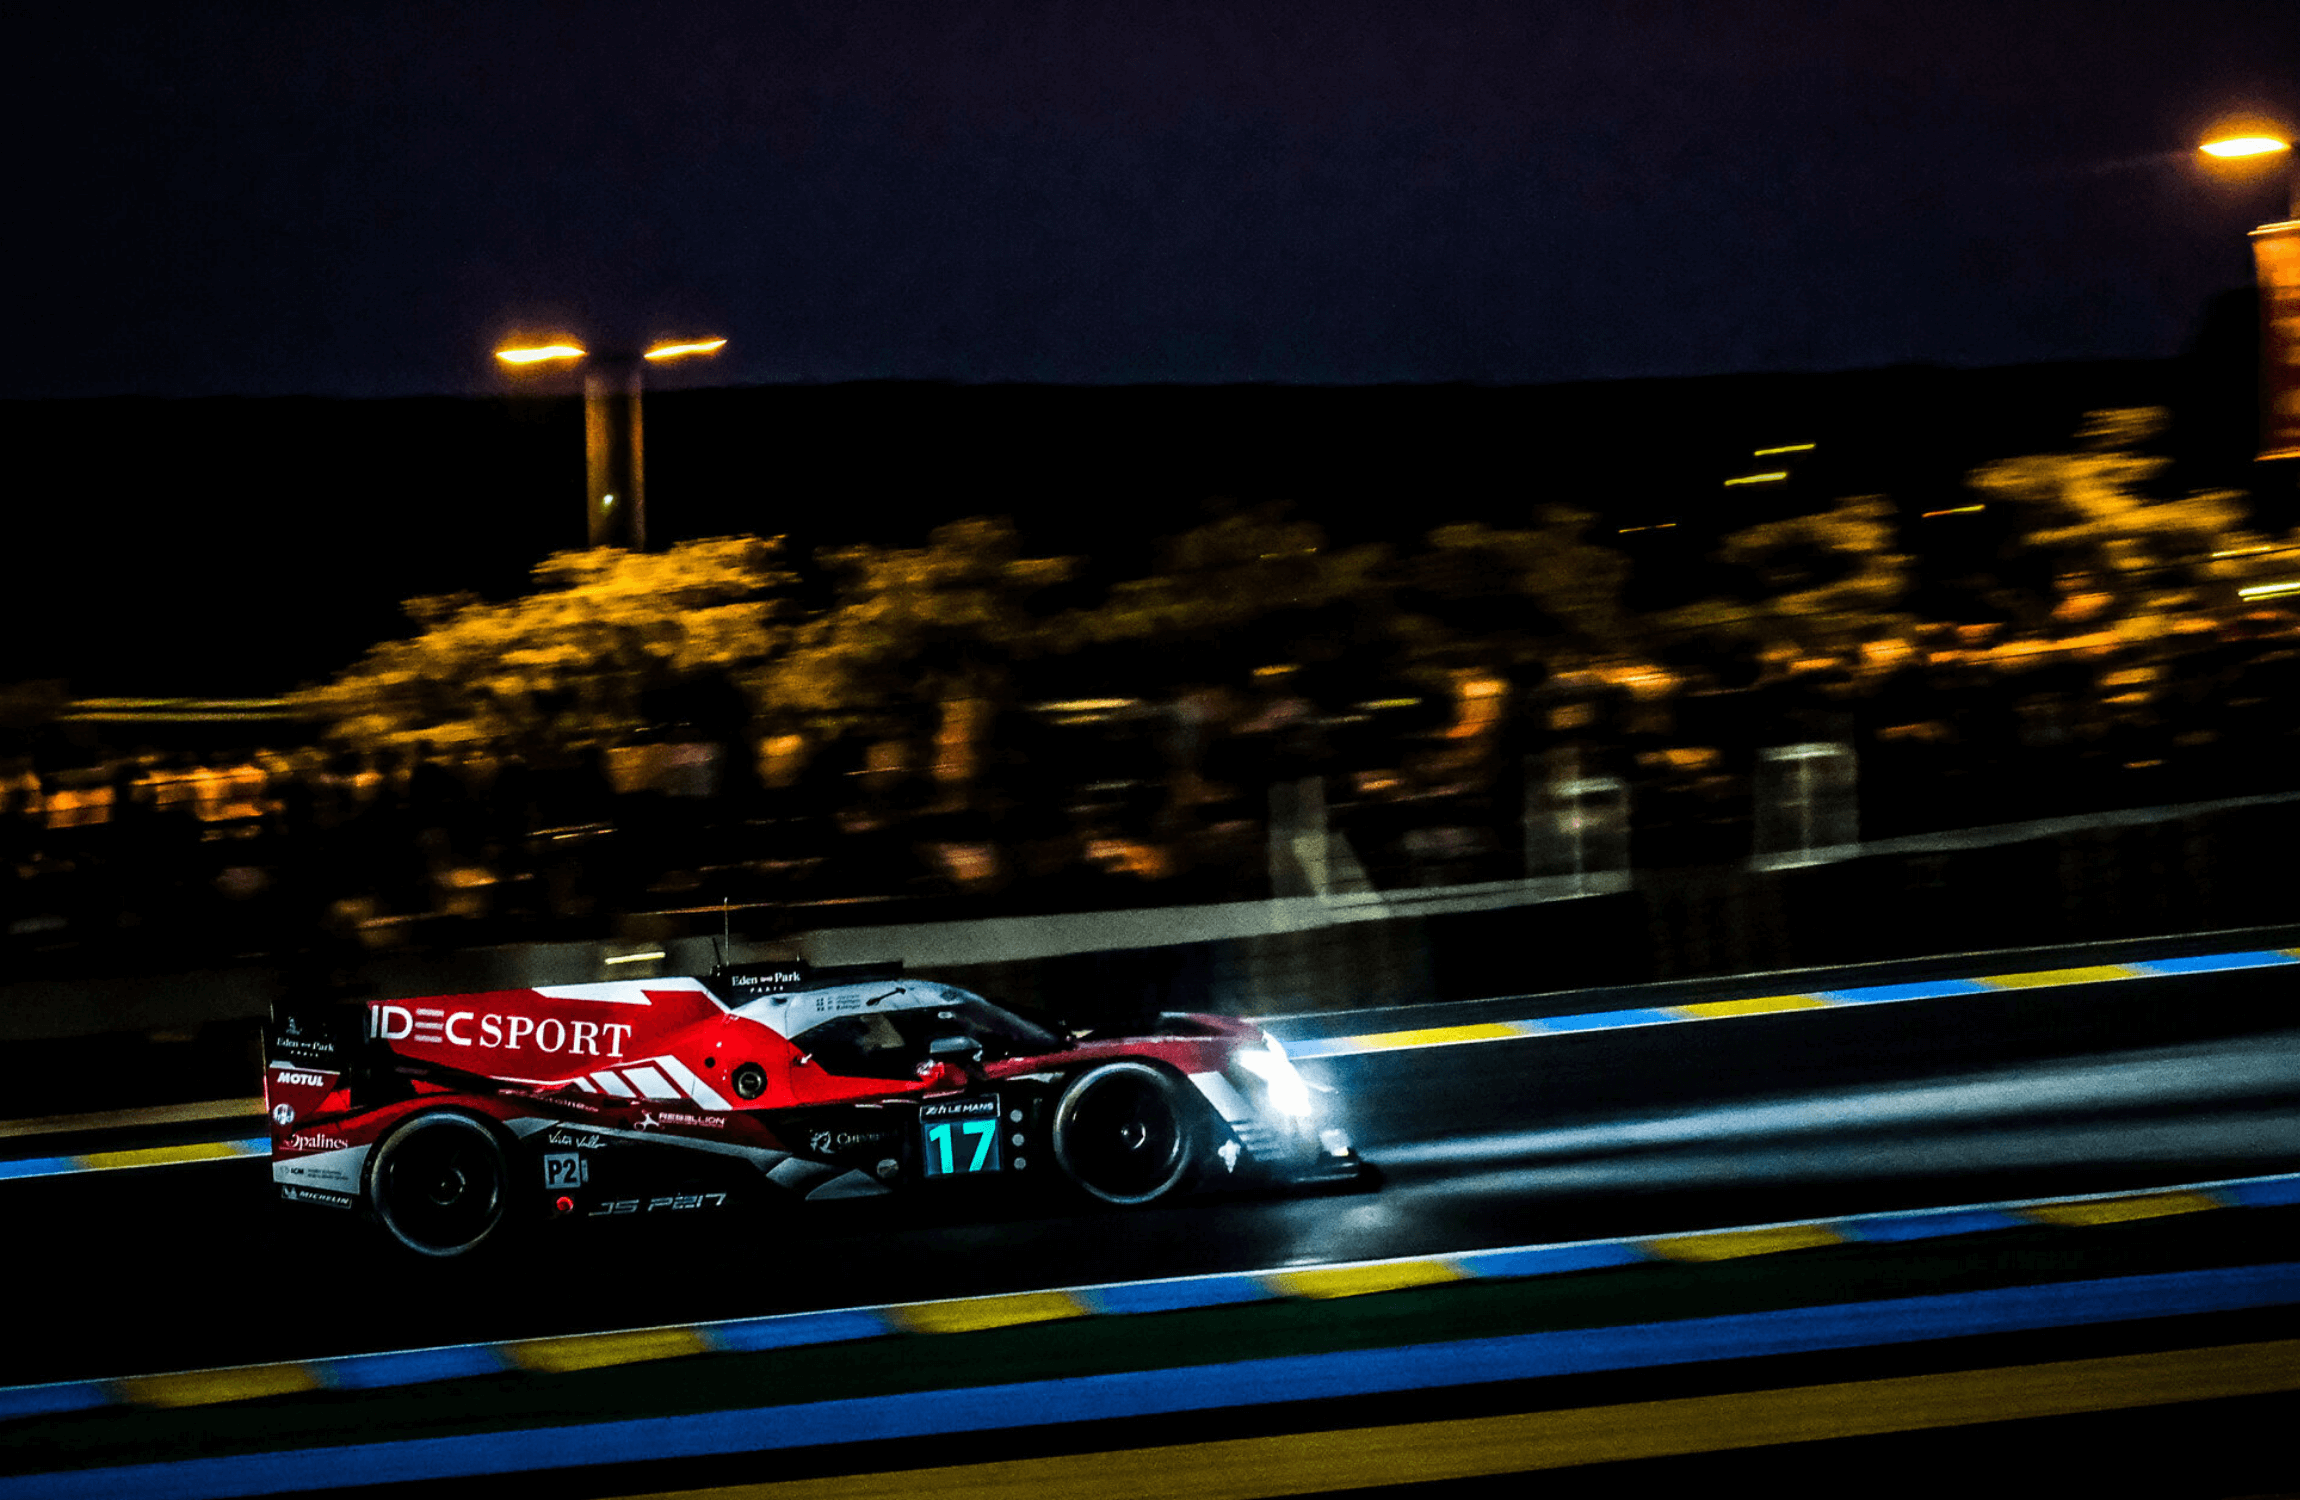 Le Mans motorsport race at night